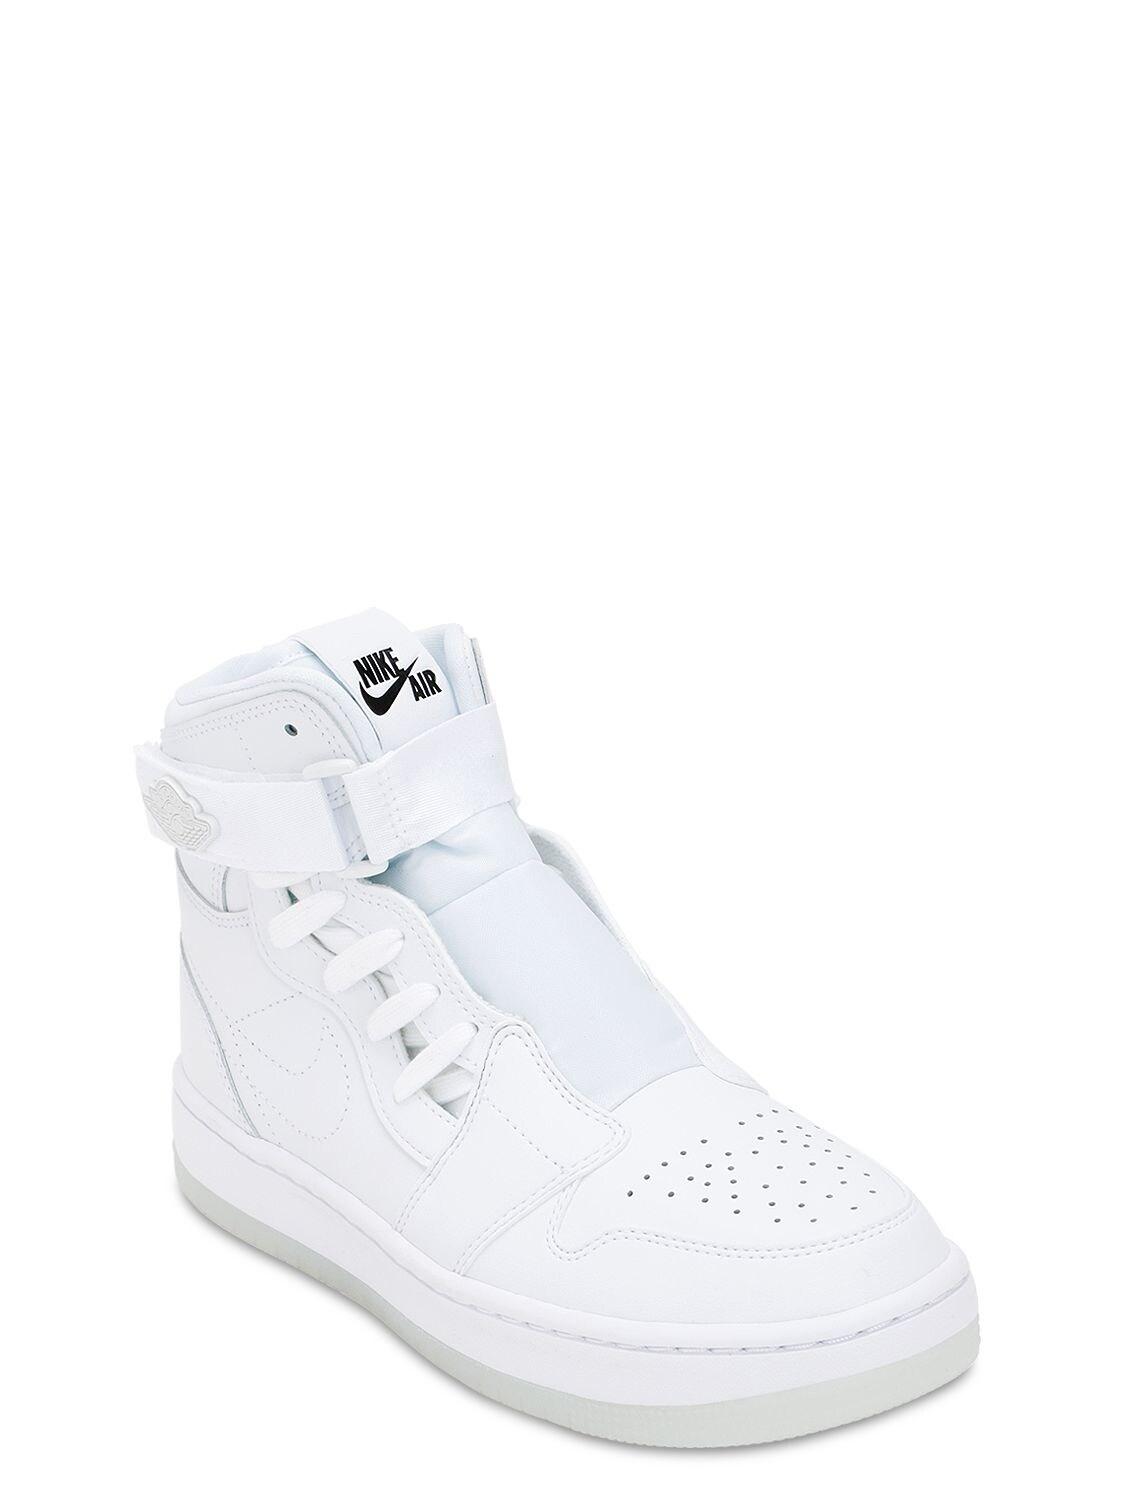 Nike Leather Air Jordan 1 Nova Xx Shoe in White & Black (White) | Lyst